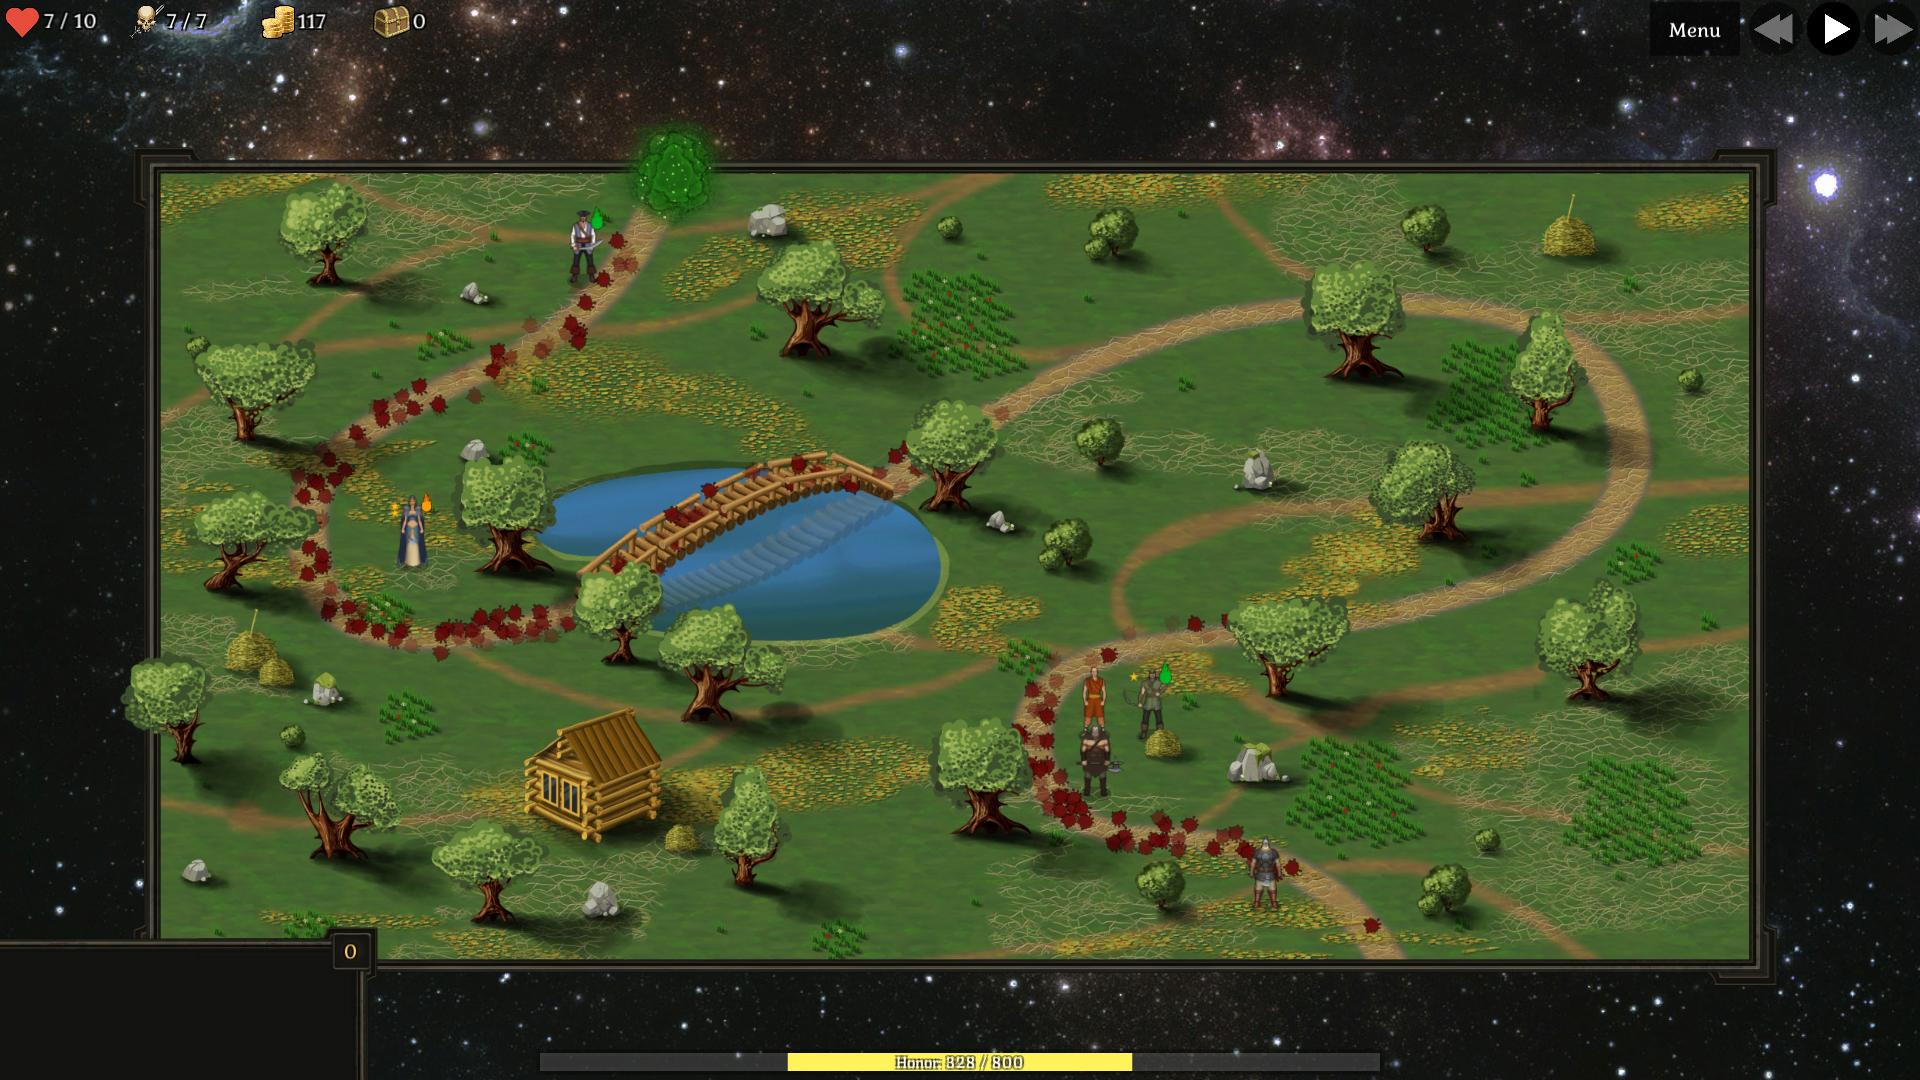 Screenshot №4 from game Ultimus bellum